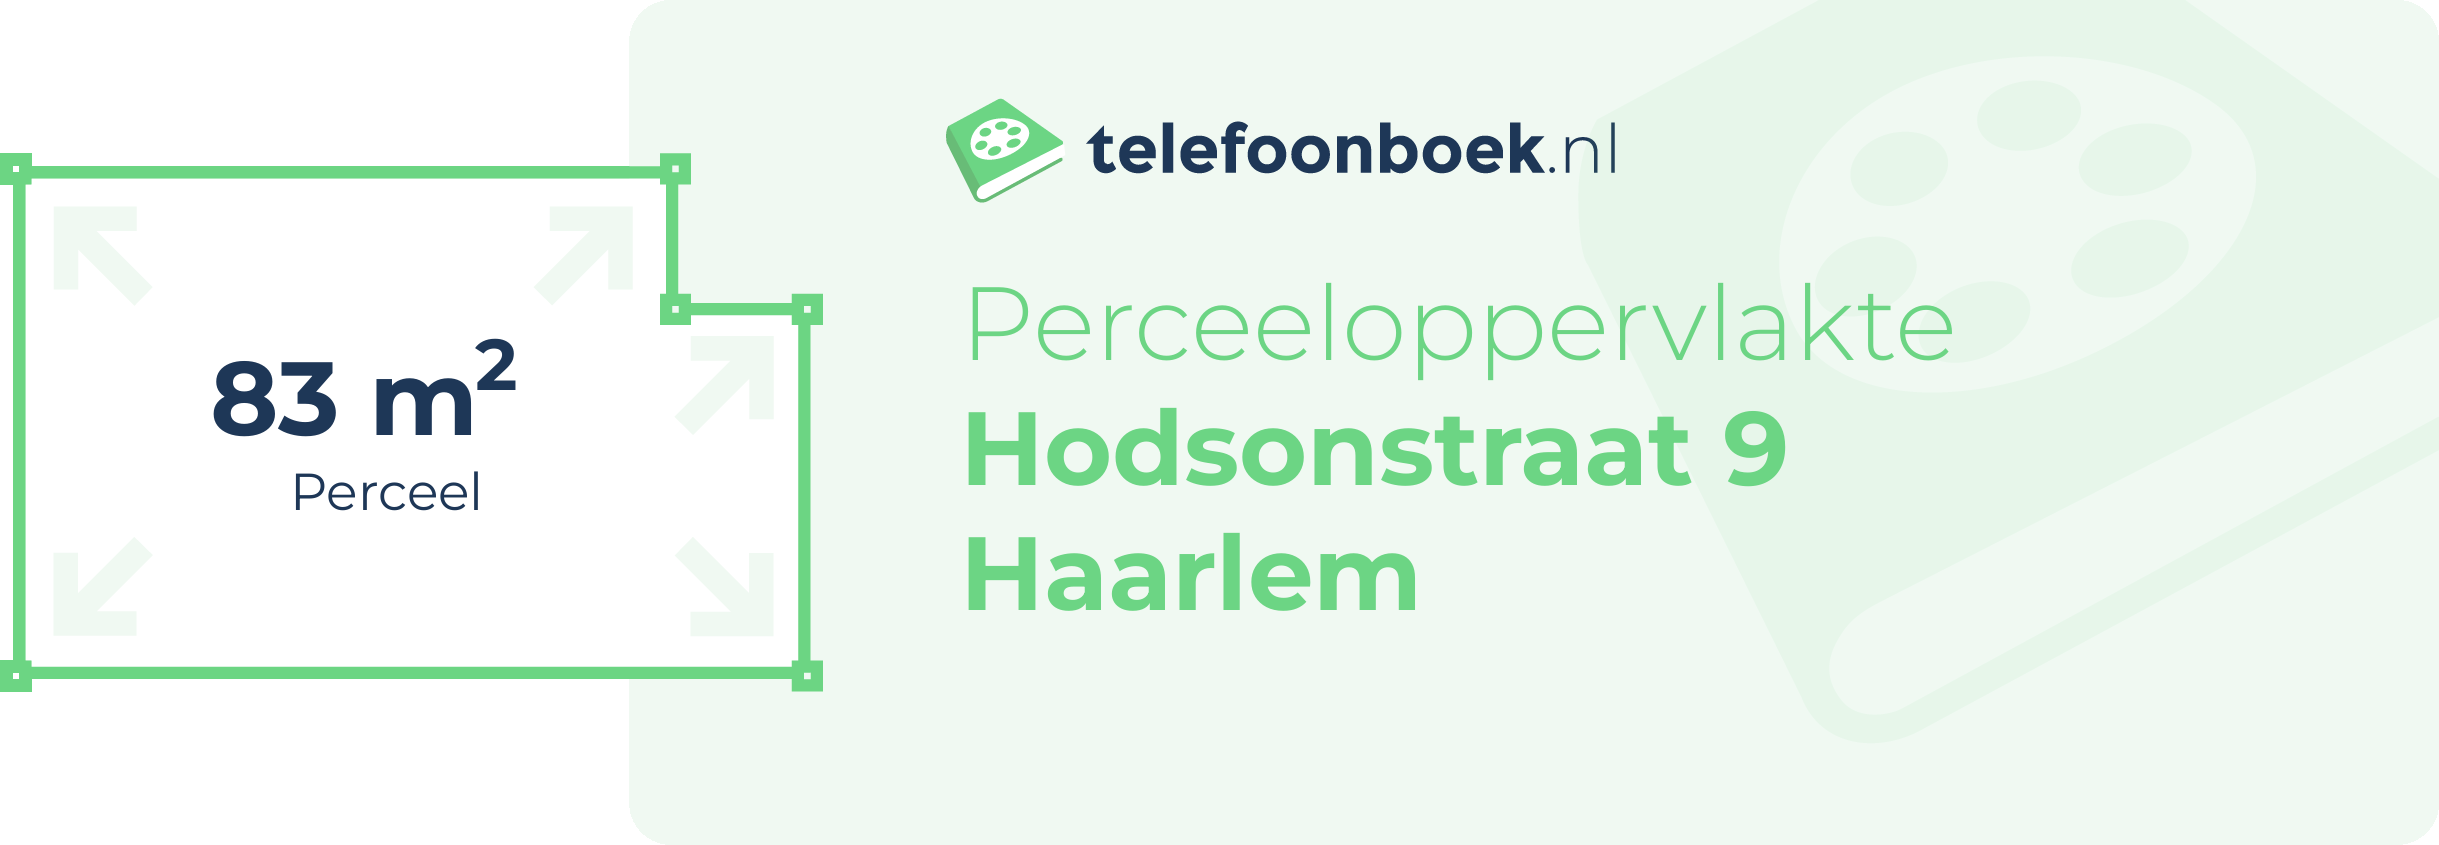 Perceeloppervlakte Hodsonstraat 9 Haarlem